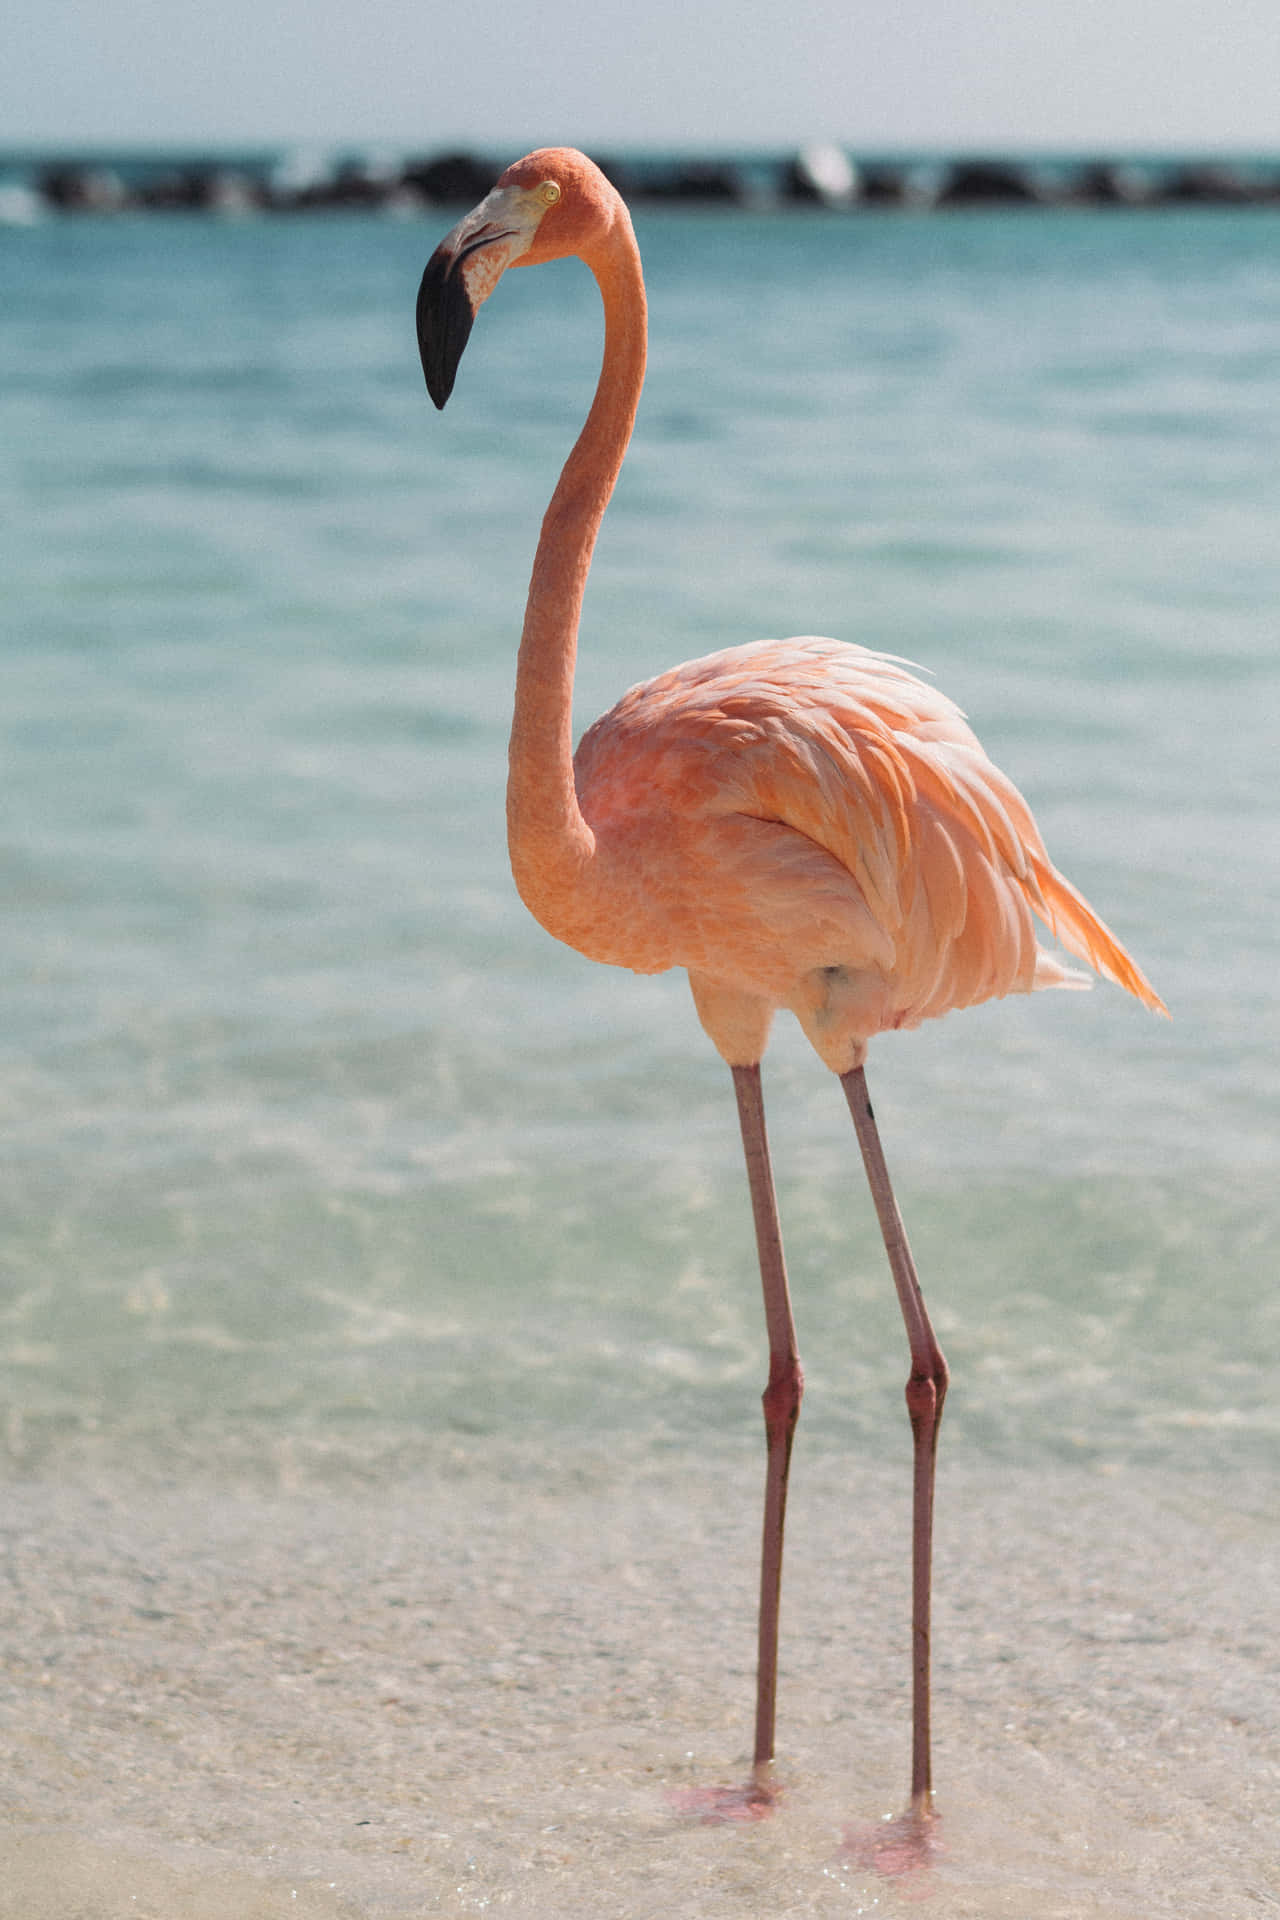 "Immersive View of a Flamingo in its Natural Habitat" Wallpaper